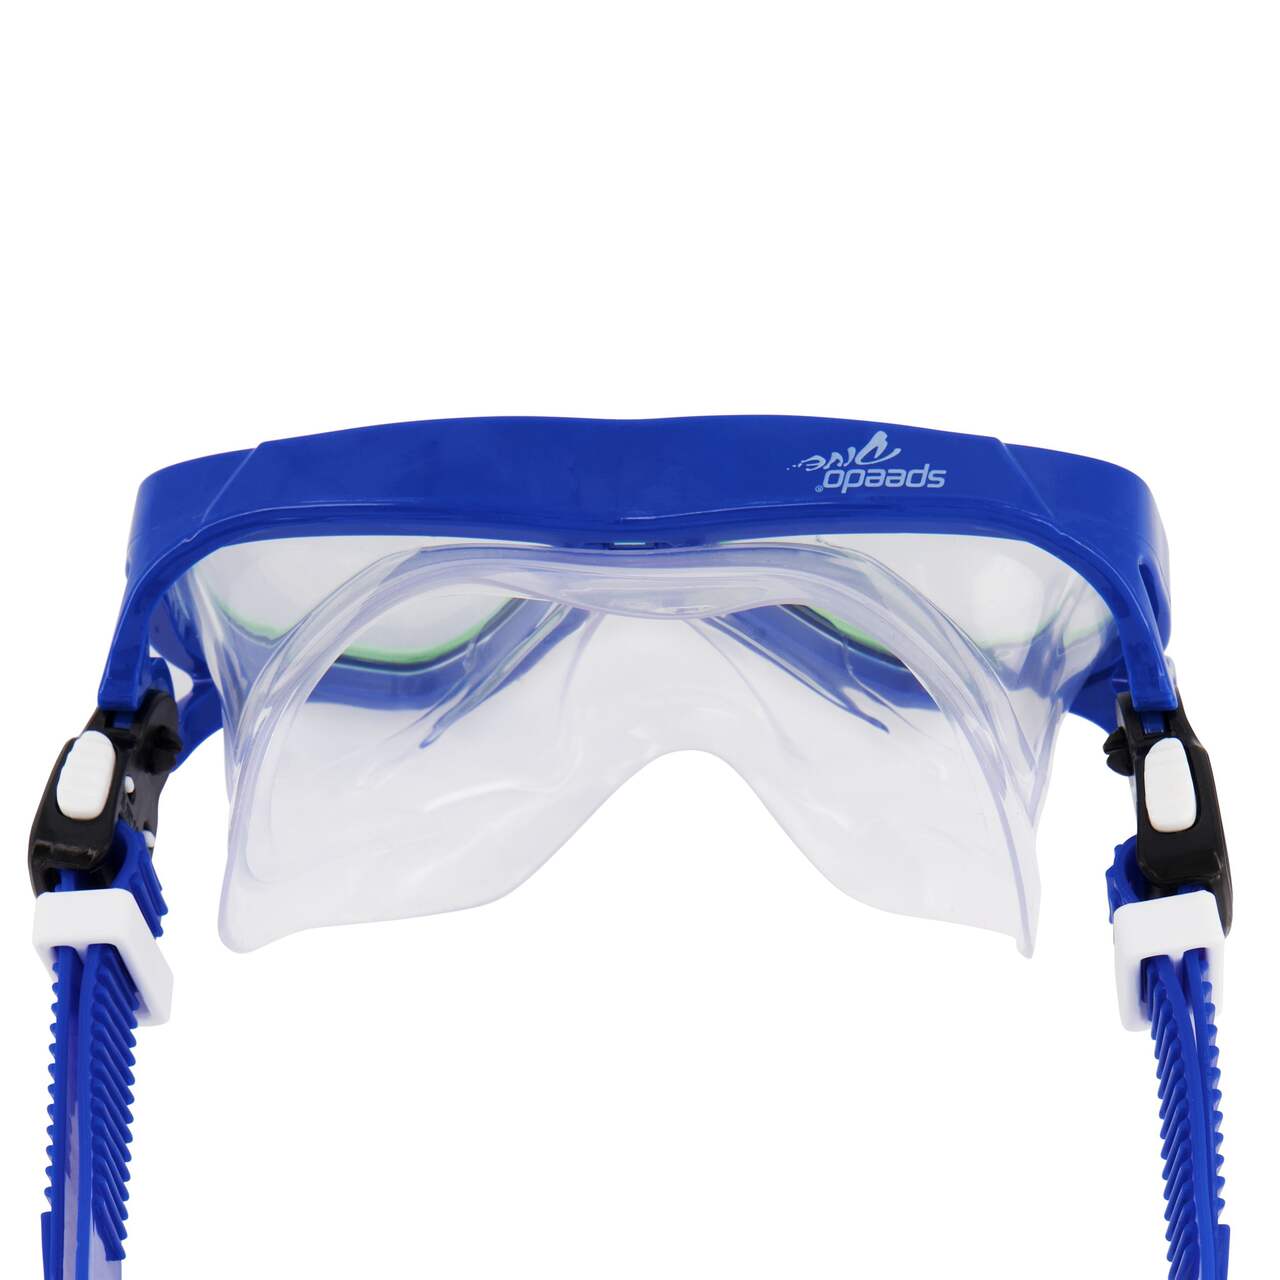 Big Time SHARKMAN Super Swimmer Dress Up Swim Gear, Mask with